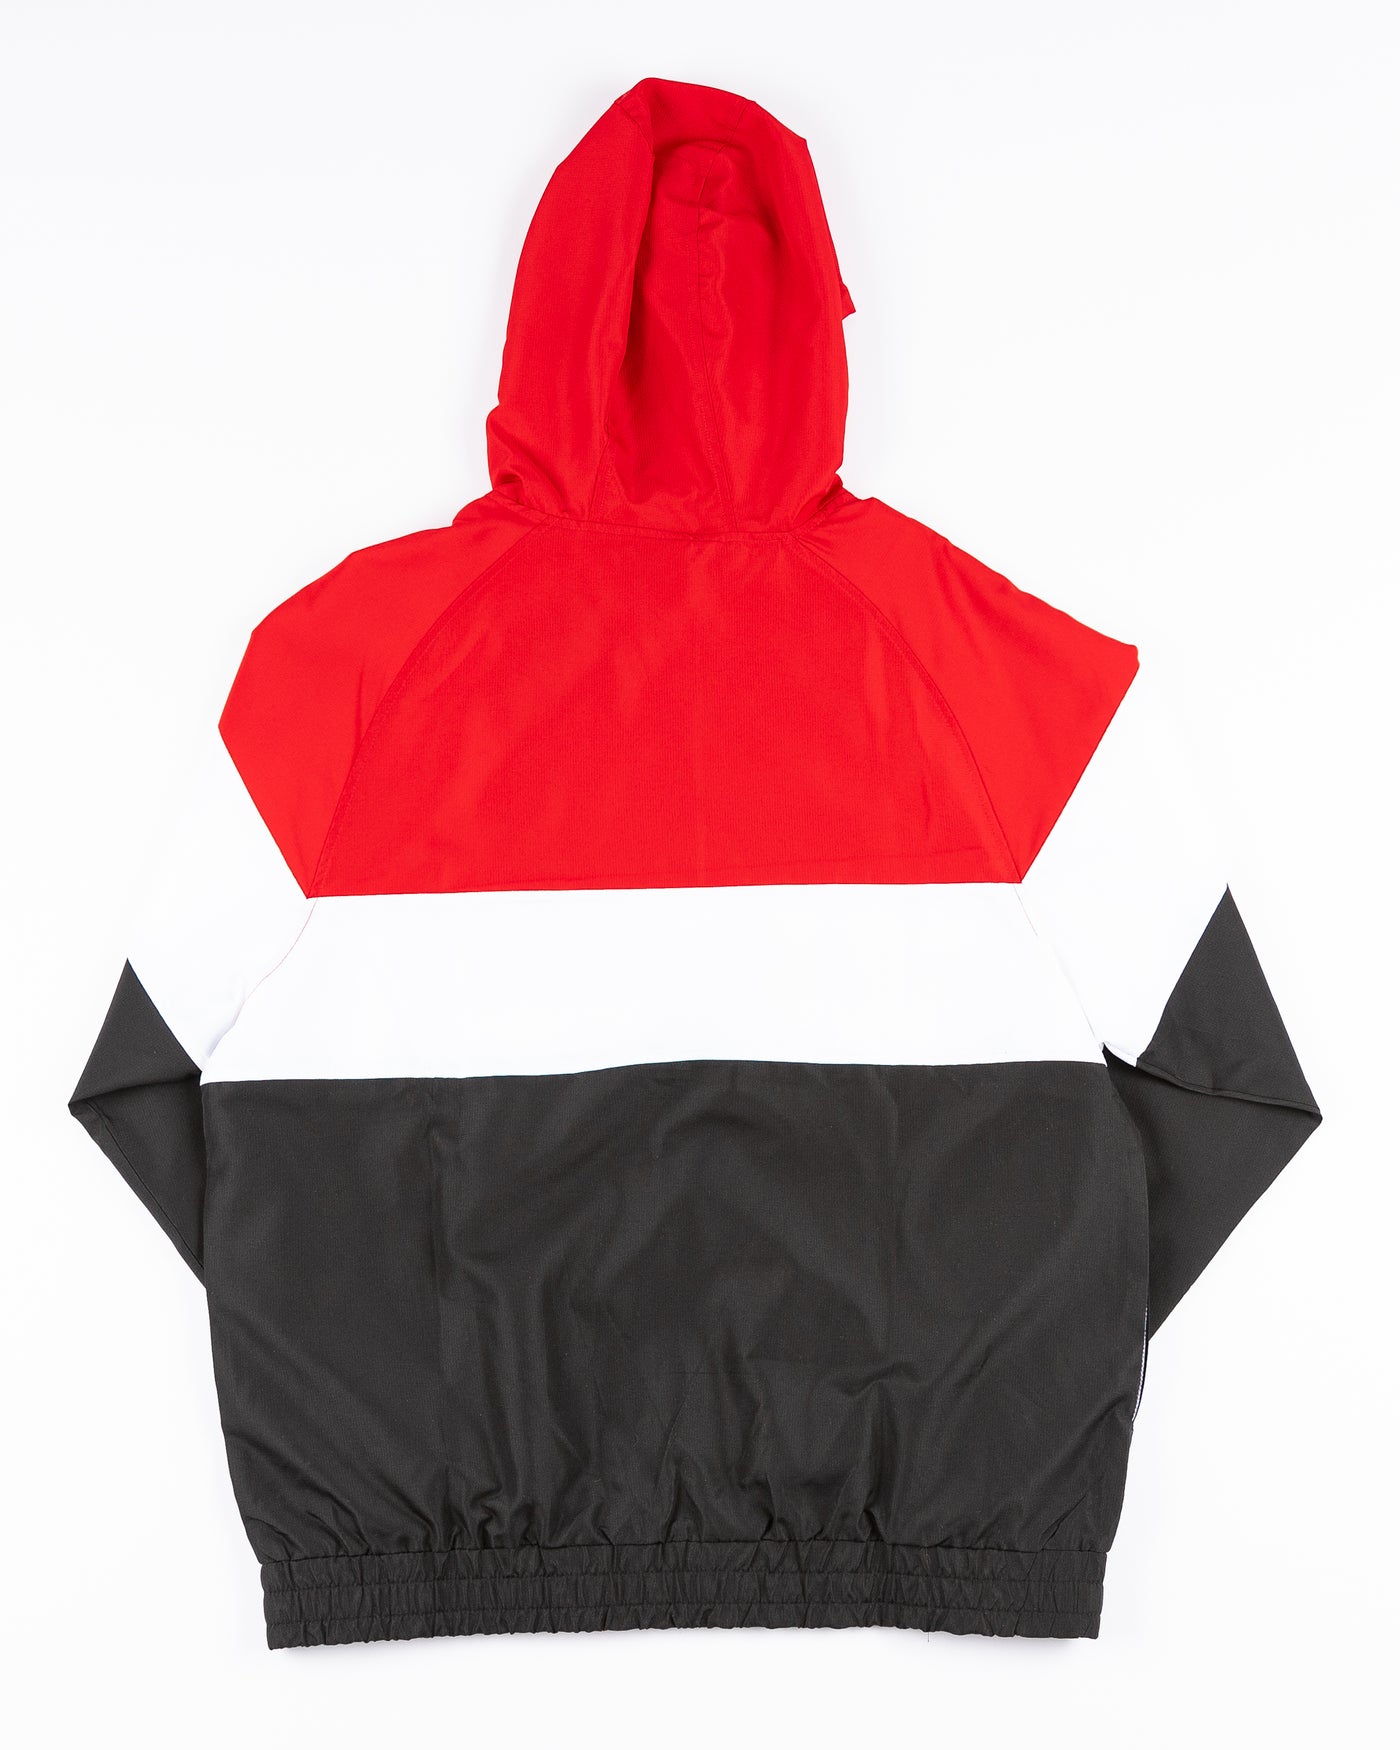 black red and white New Era hooded windbreaker jacket with Chicago Blackhawks wordmark and primary logo - back lay flat